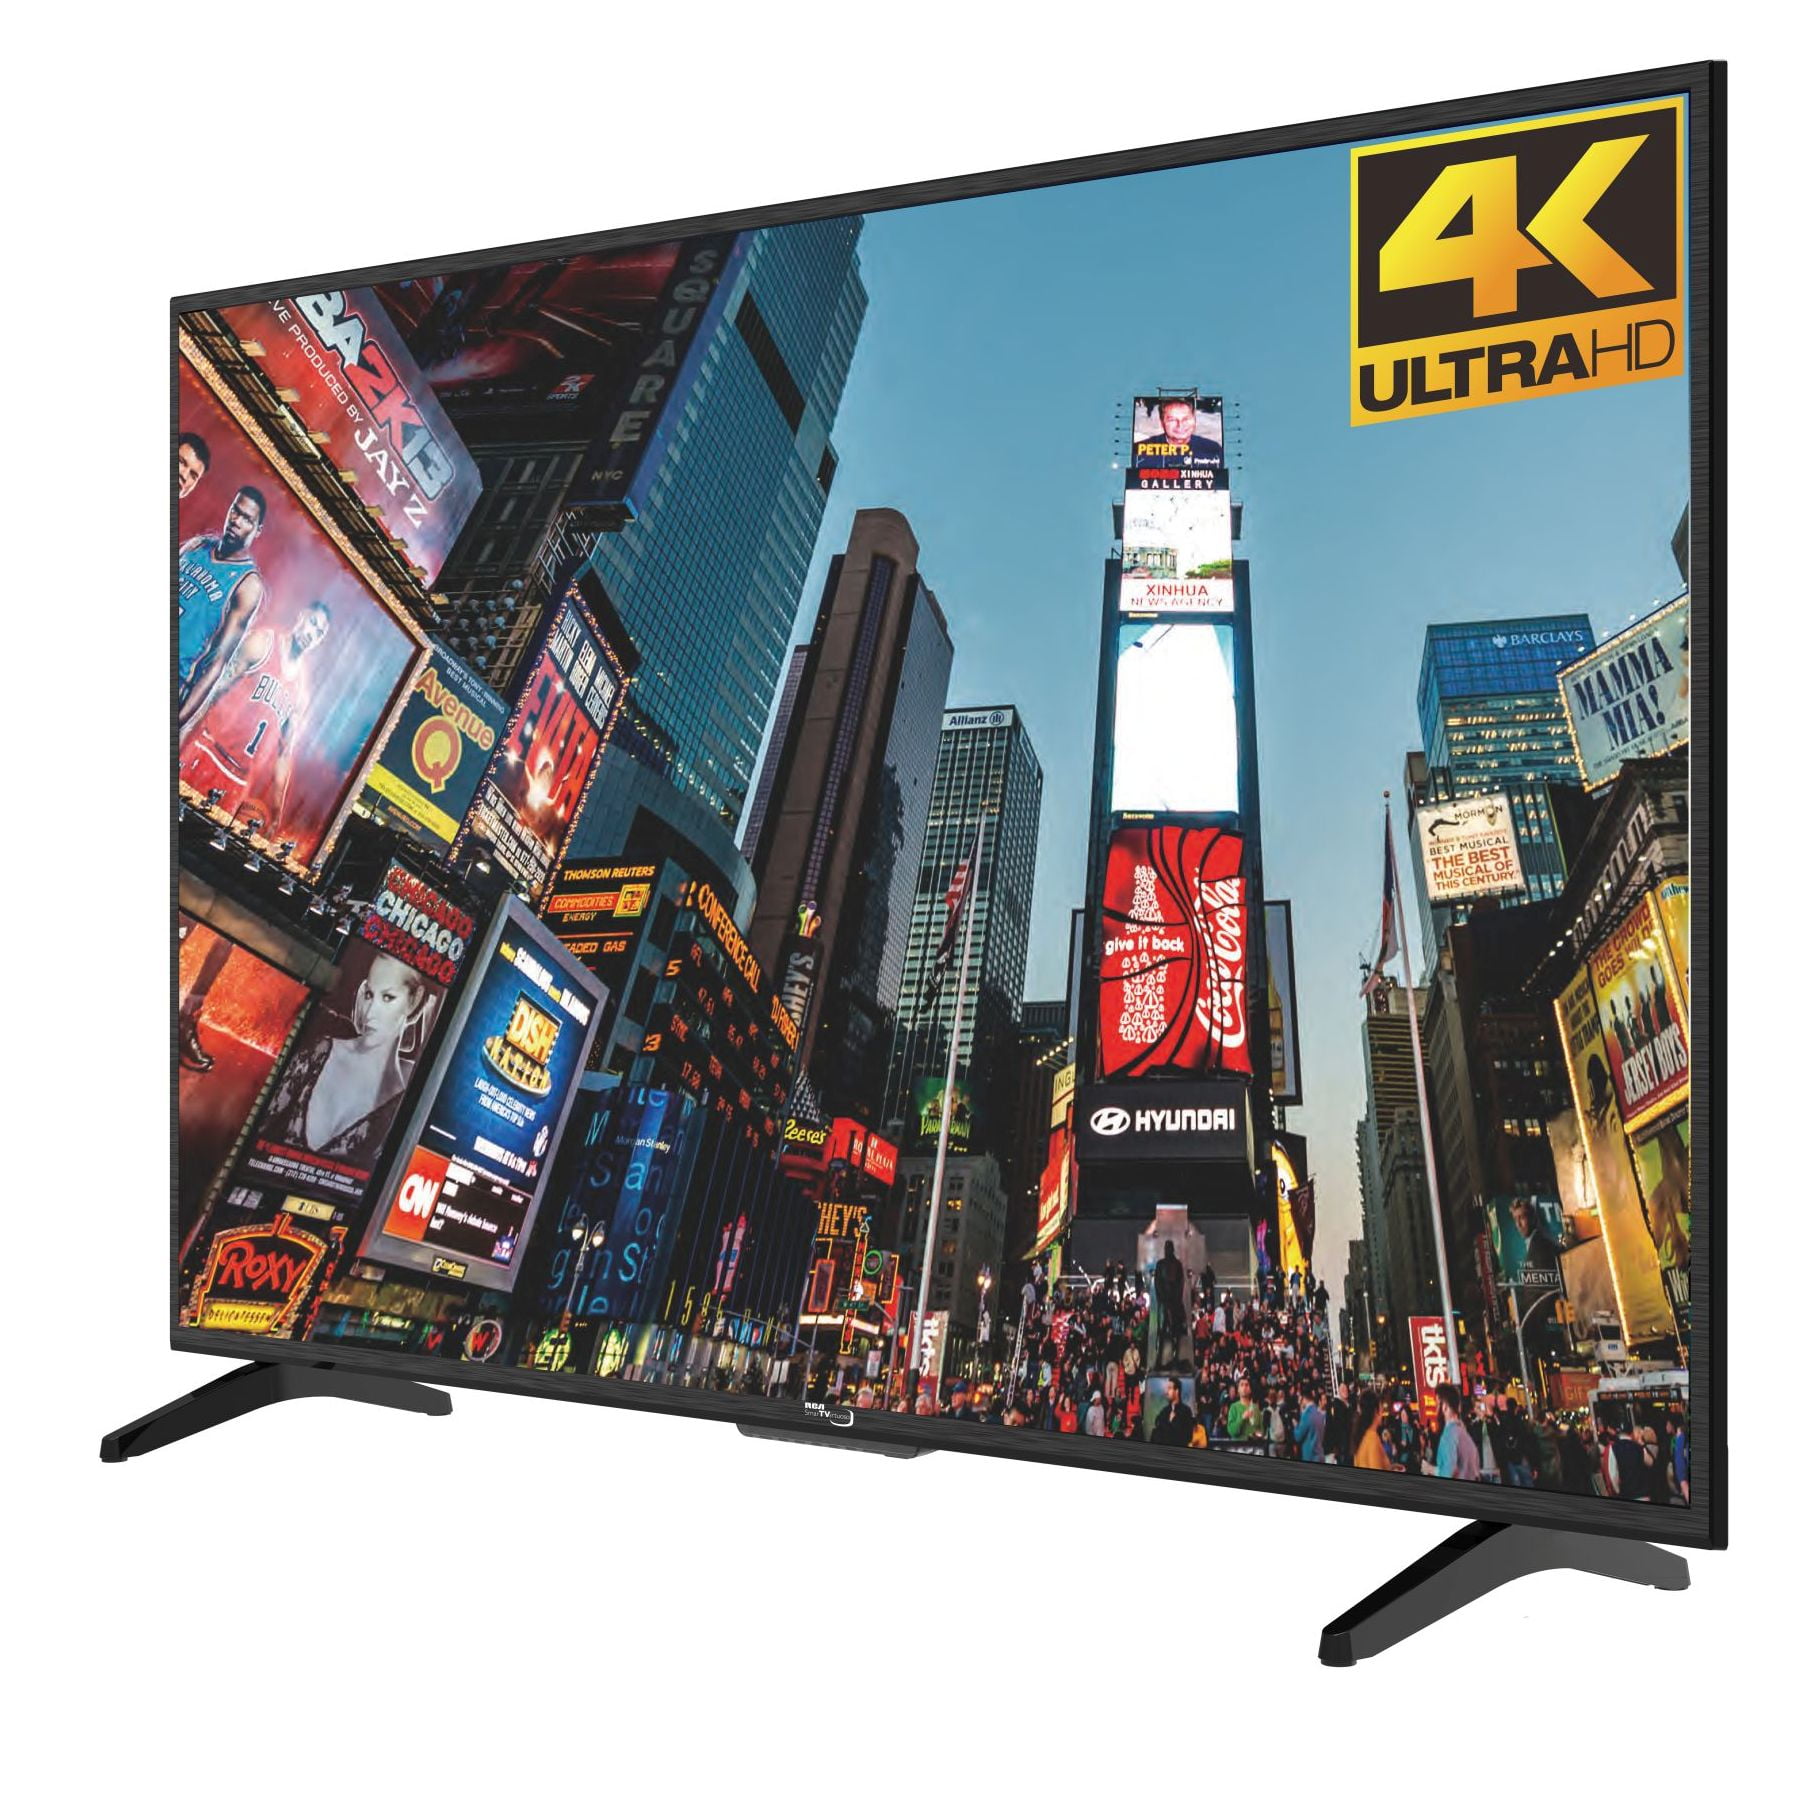 Televisores Smart Tv y televisores 4k de segunda mano TD SYSTEMS 55¨ UHD  (K55DLM7U)